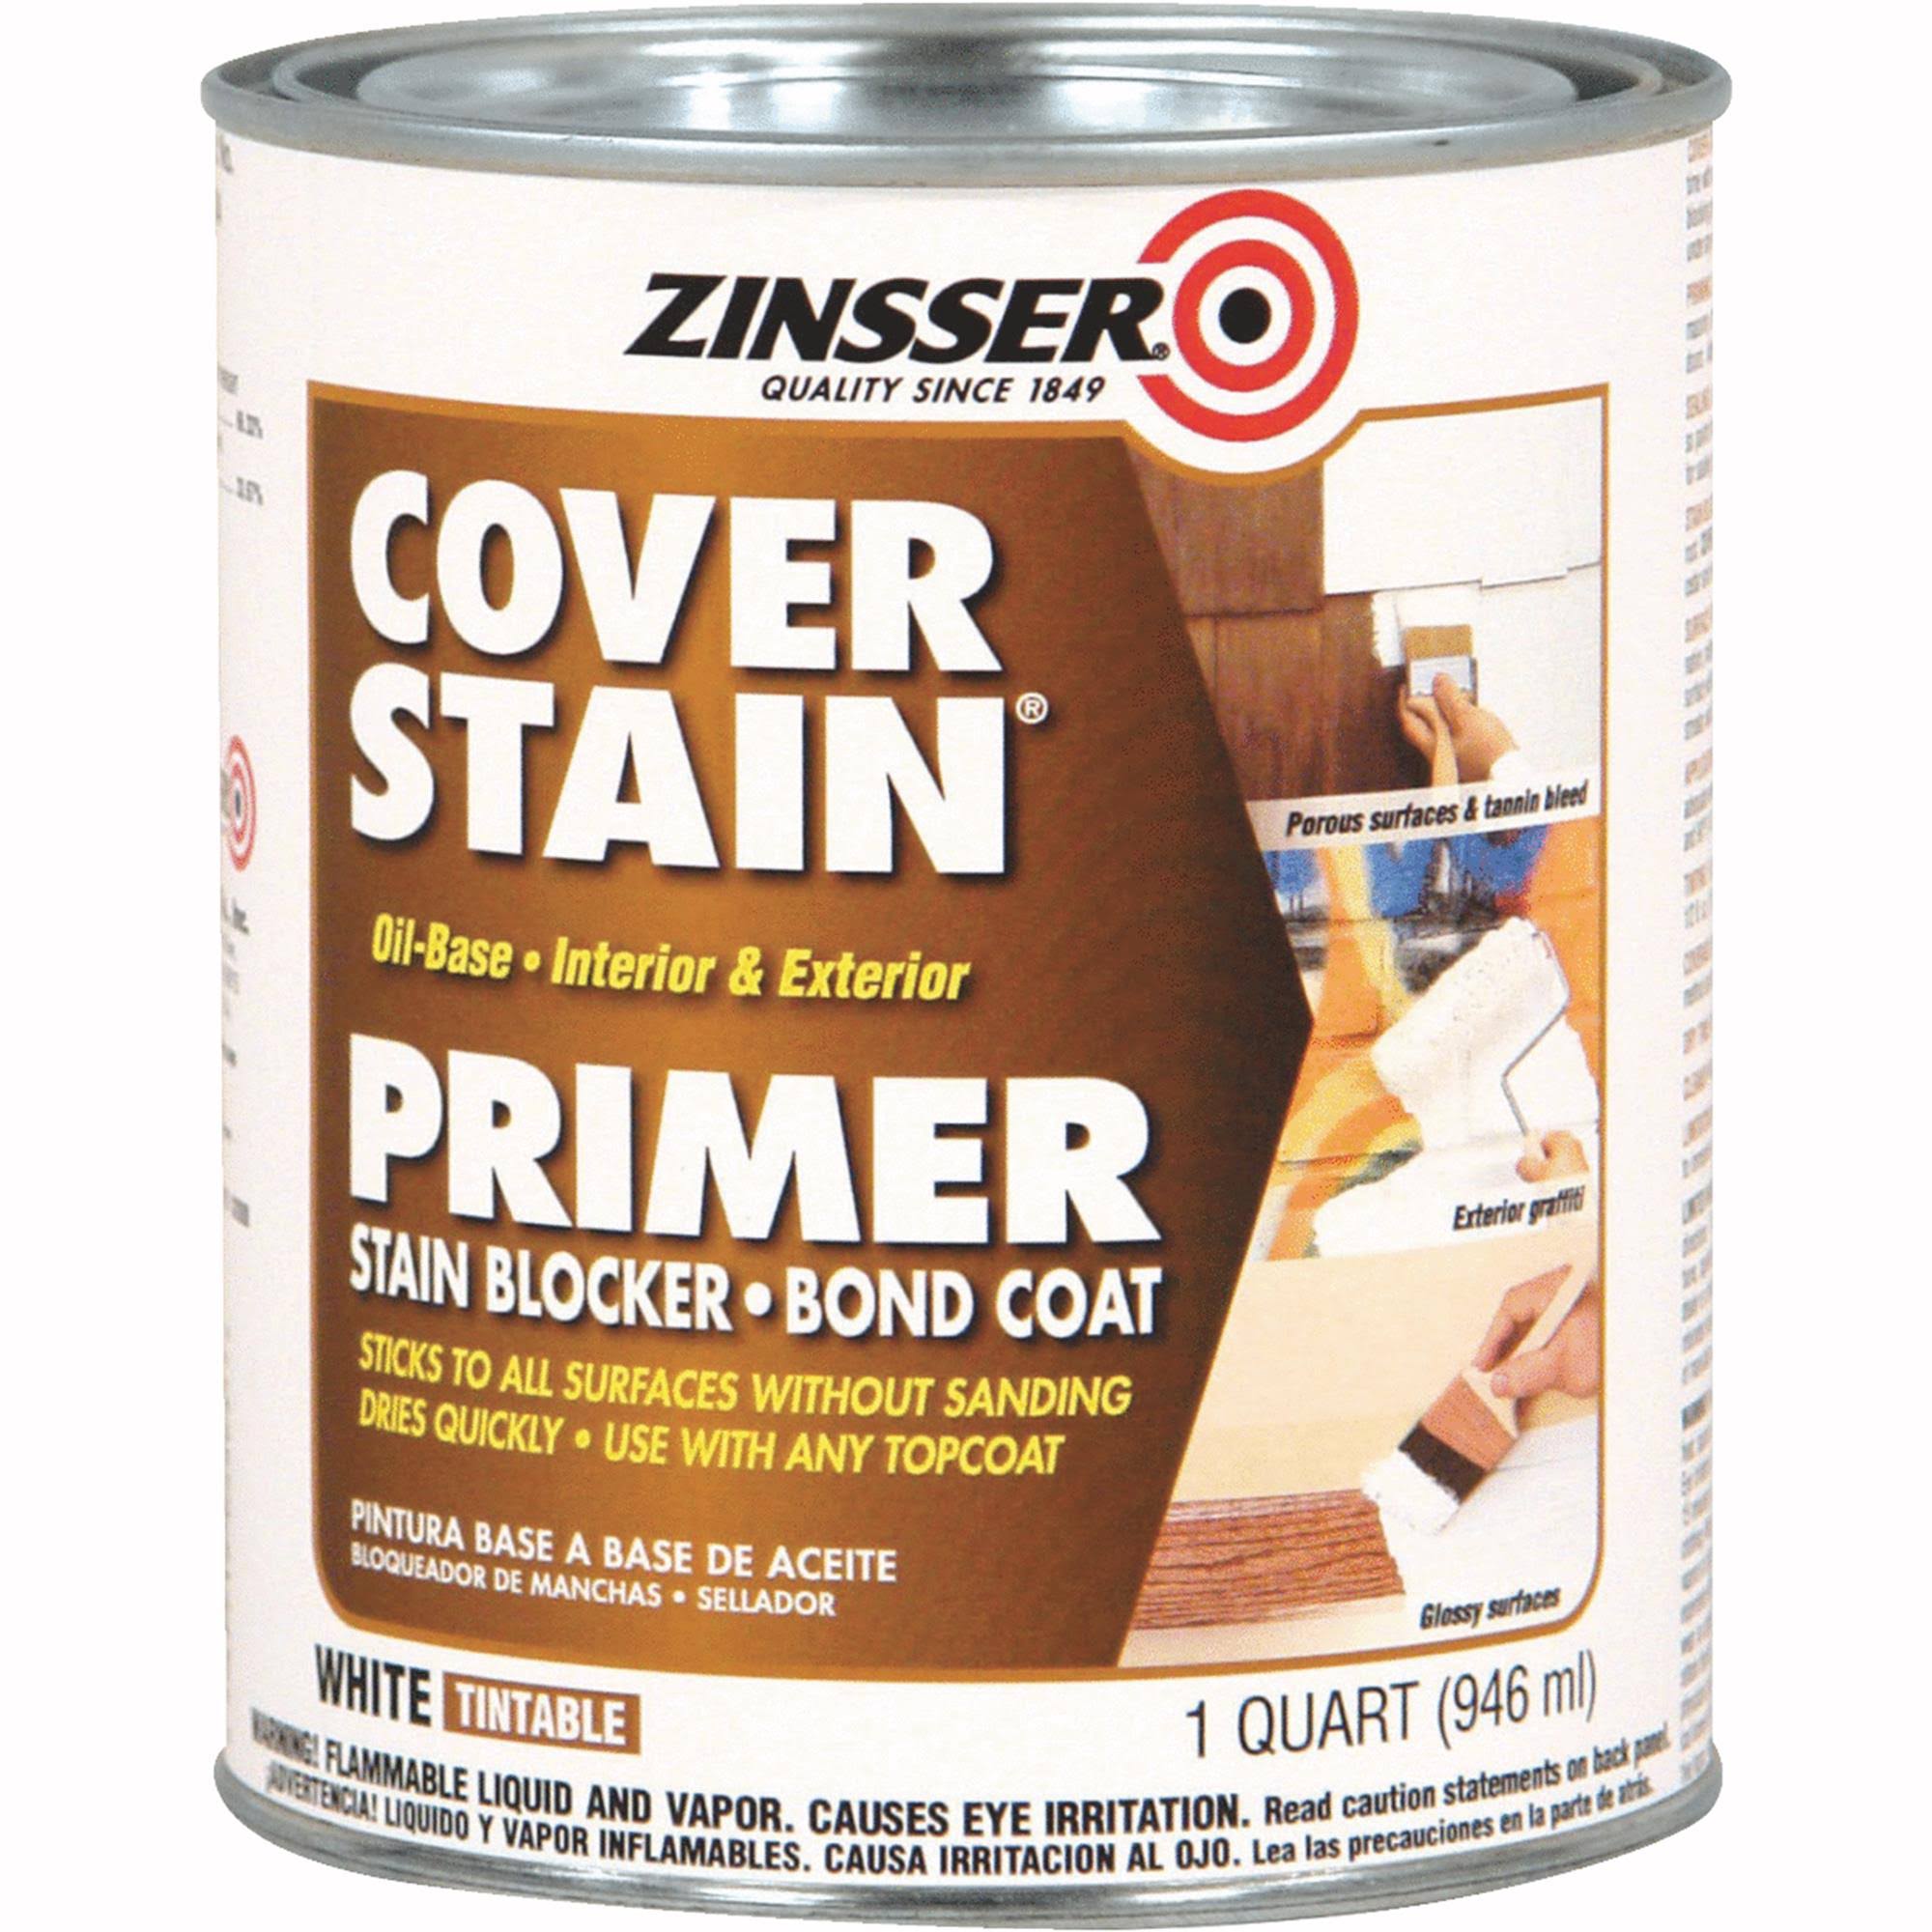 Zinsser Cover Stain Primer - White, Interior/Exterior, 1 Quart